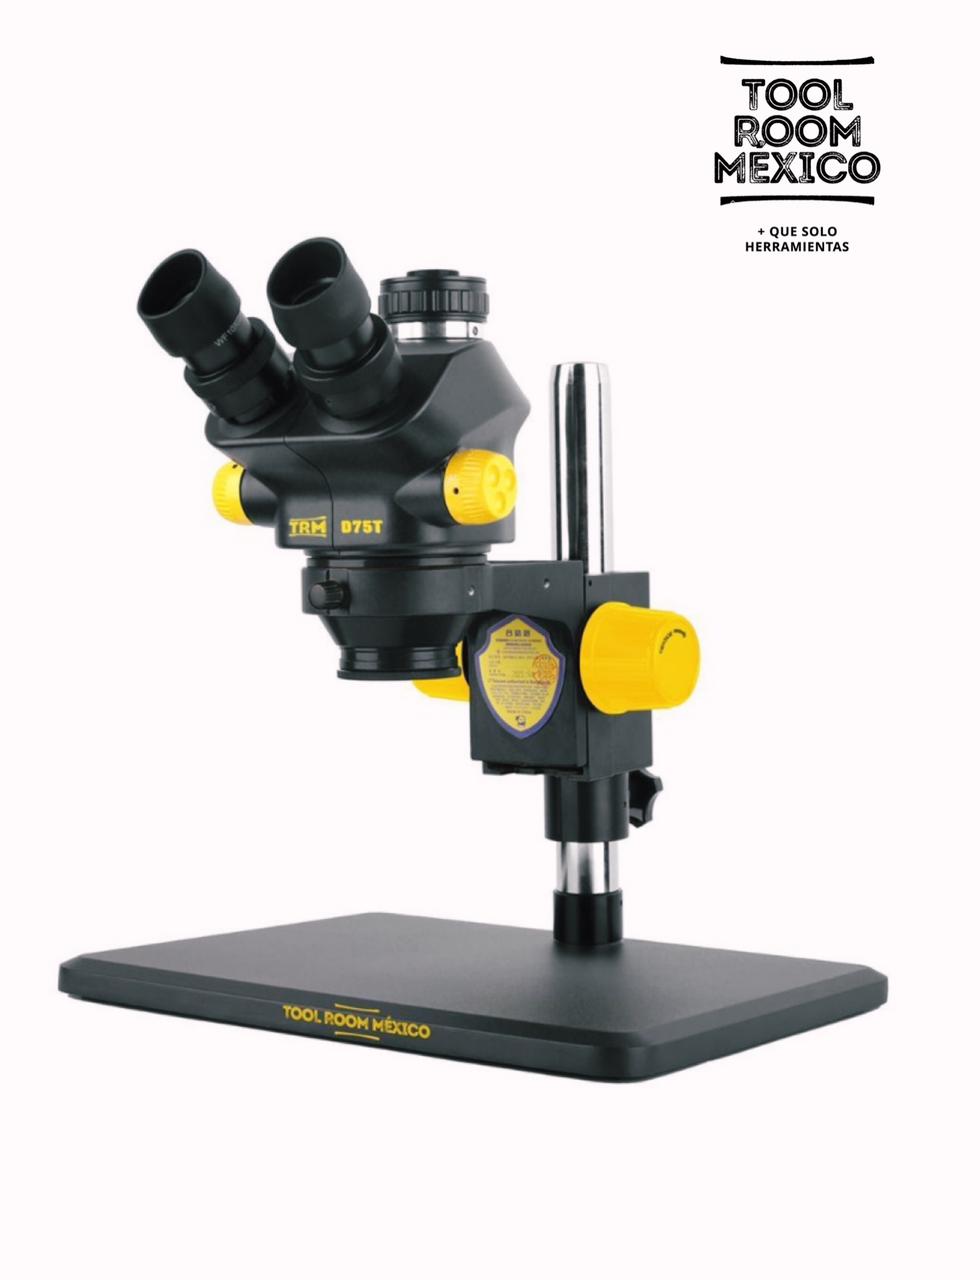 MICROSCOPIO TRINOCULAR  TOOL ROOM MEXICO D75T-B11 TRM